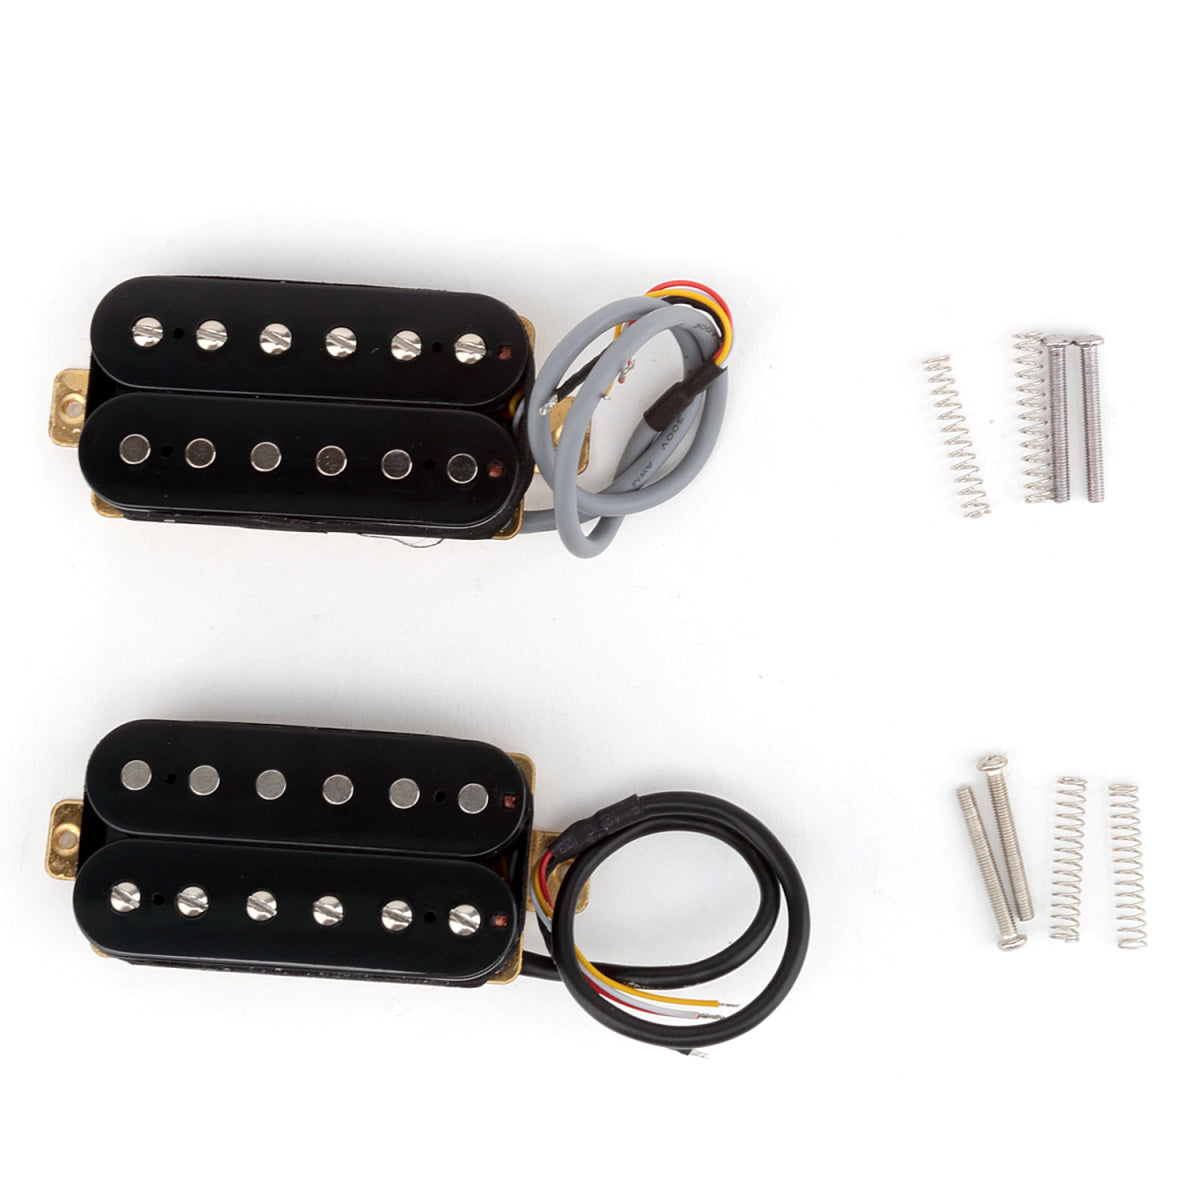 Musiclily Pro 50mm Neck & 52mm Bridge Humbucker Pickups Set for Electric Guitar, Black